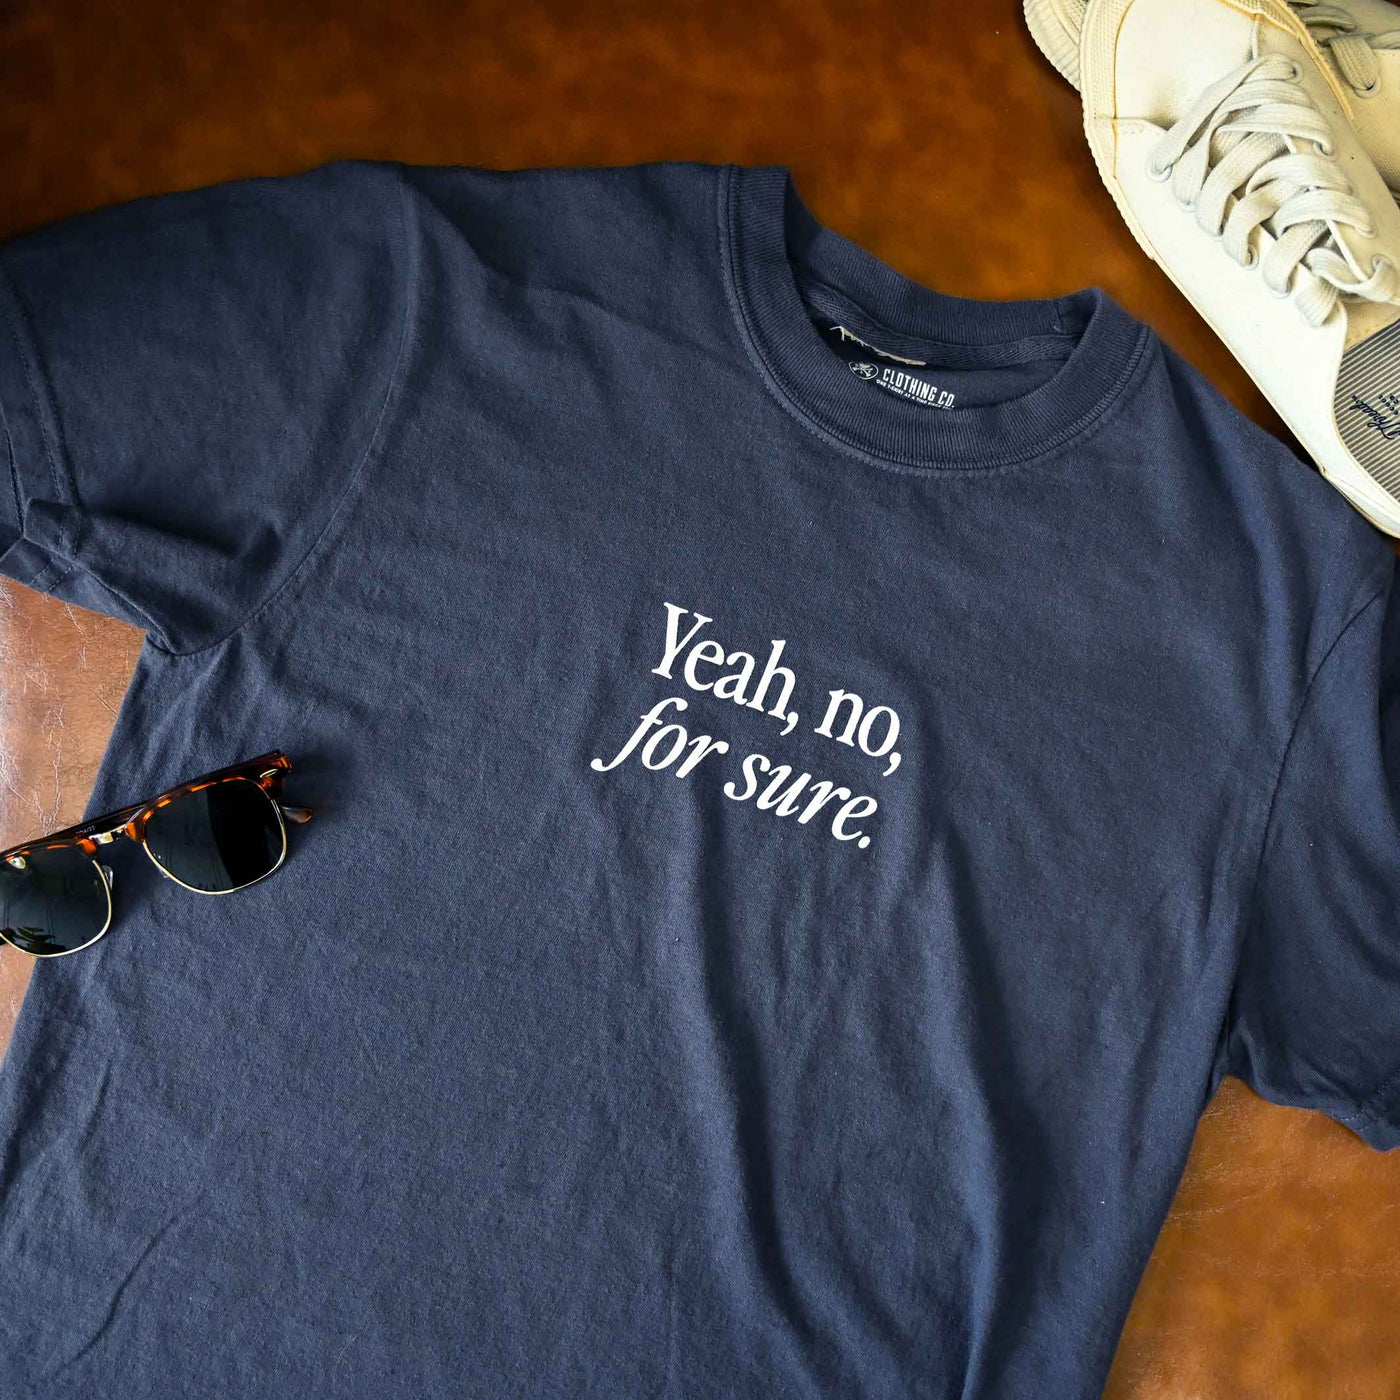 'Yeah, no, for Sure' Unisex Crew T-Shirt